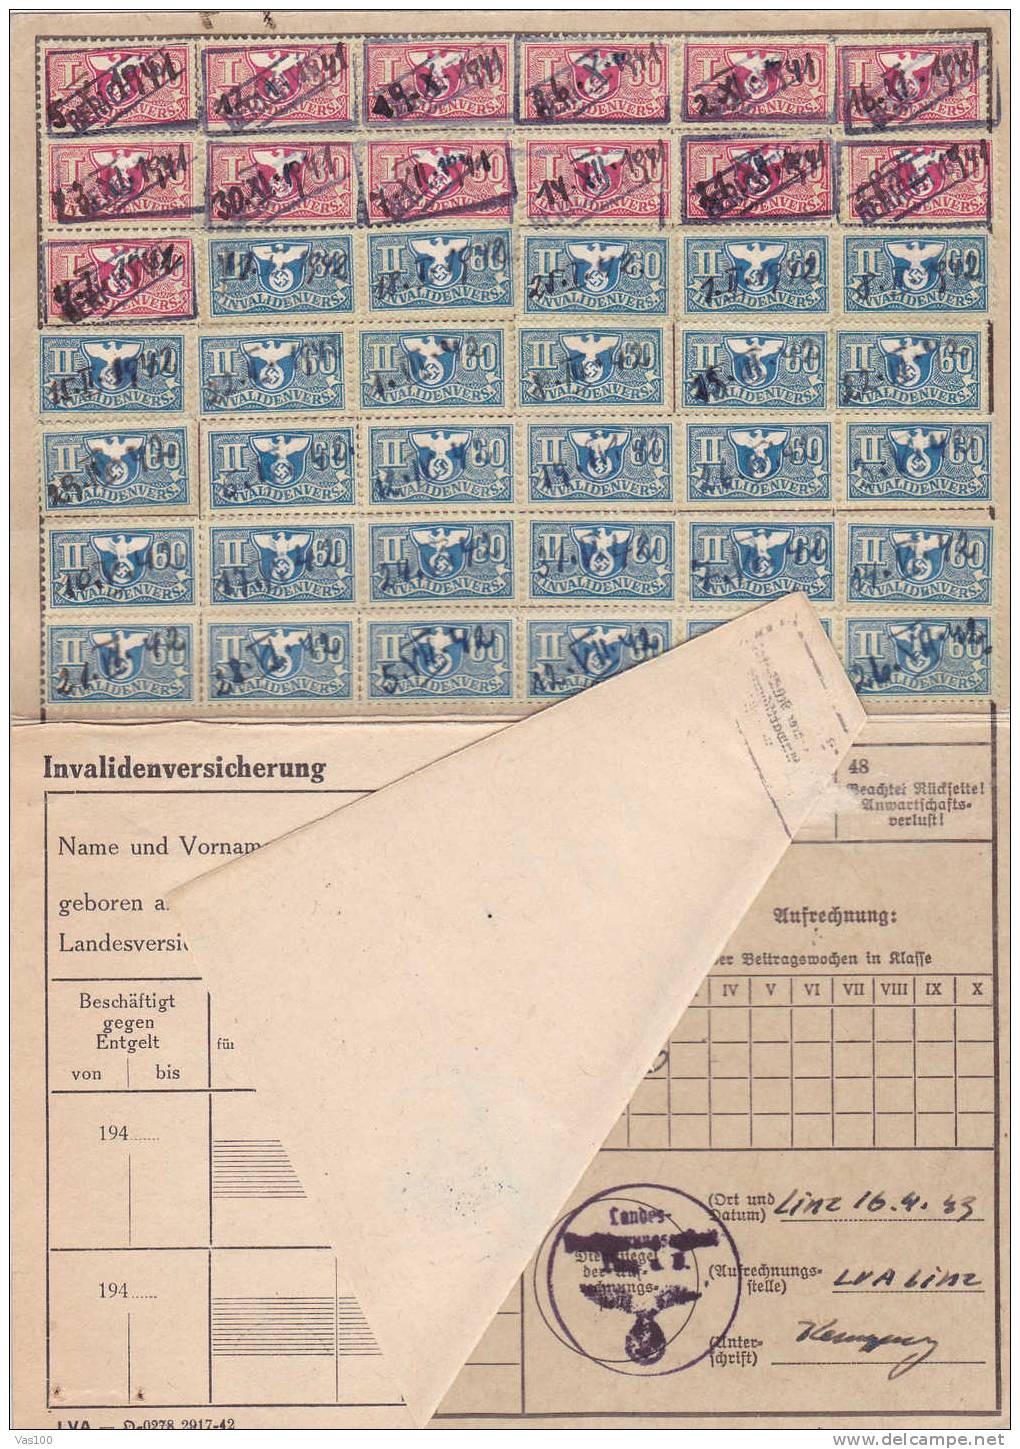 Invalidenversicherung.Dui Ttungscarte  Linz 1941-43 Germany 44 Stamps Invalidenvers!! - First Aid